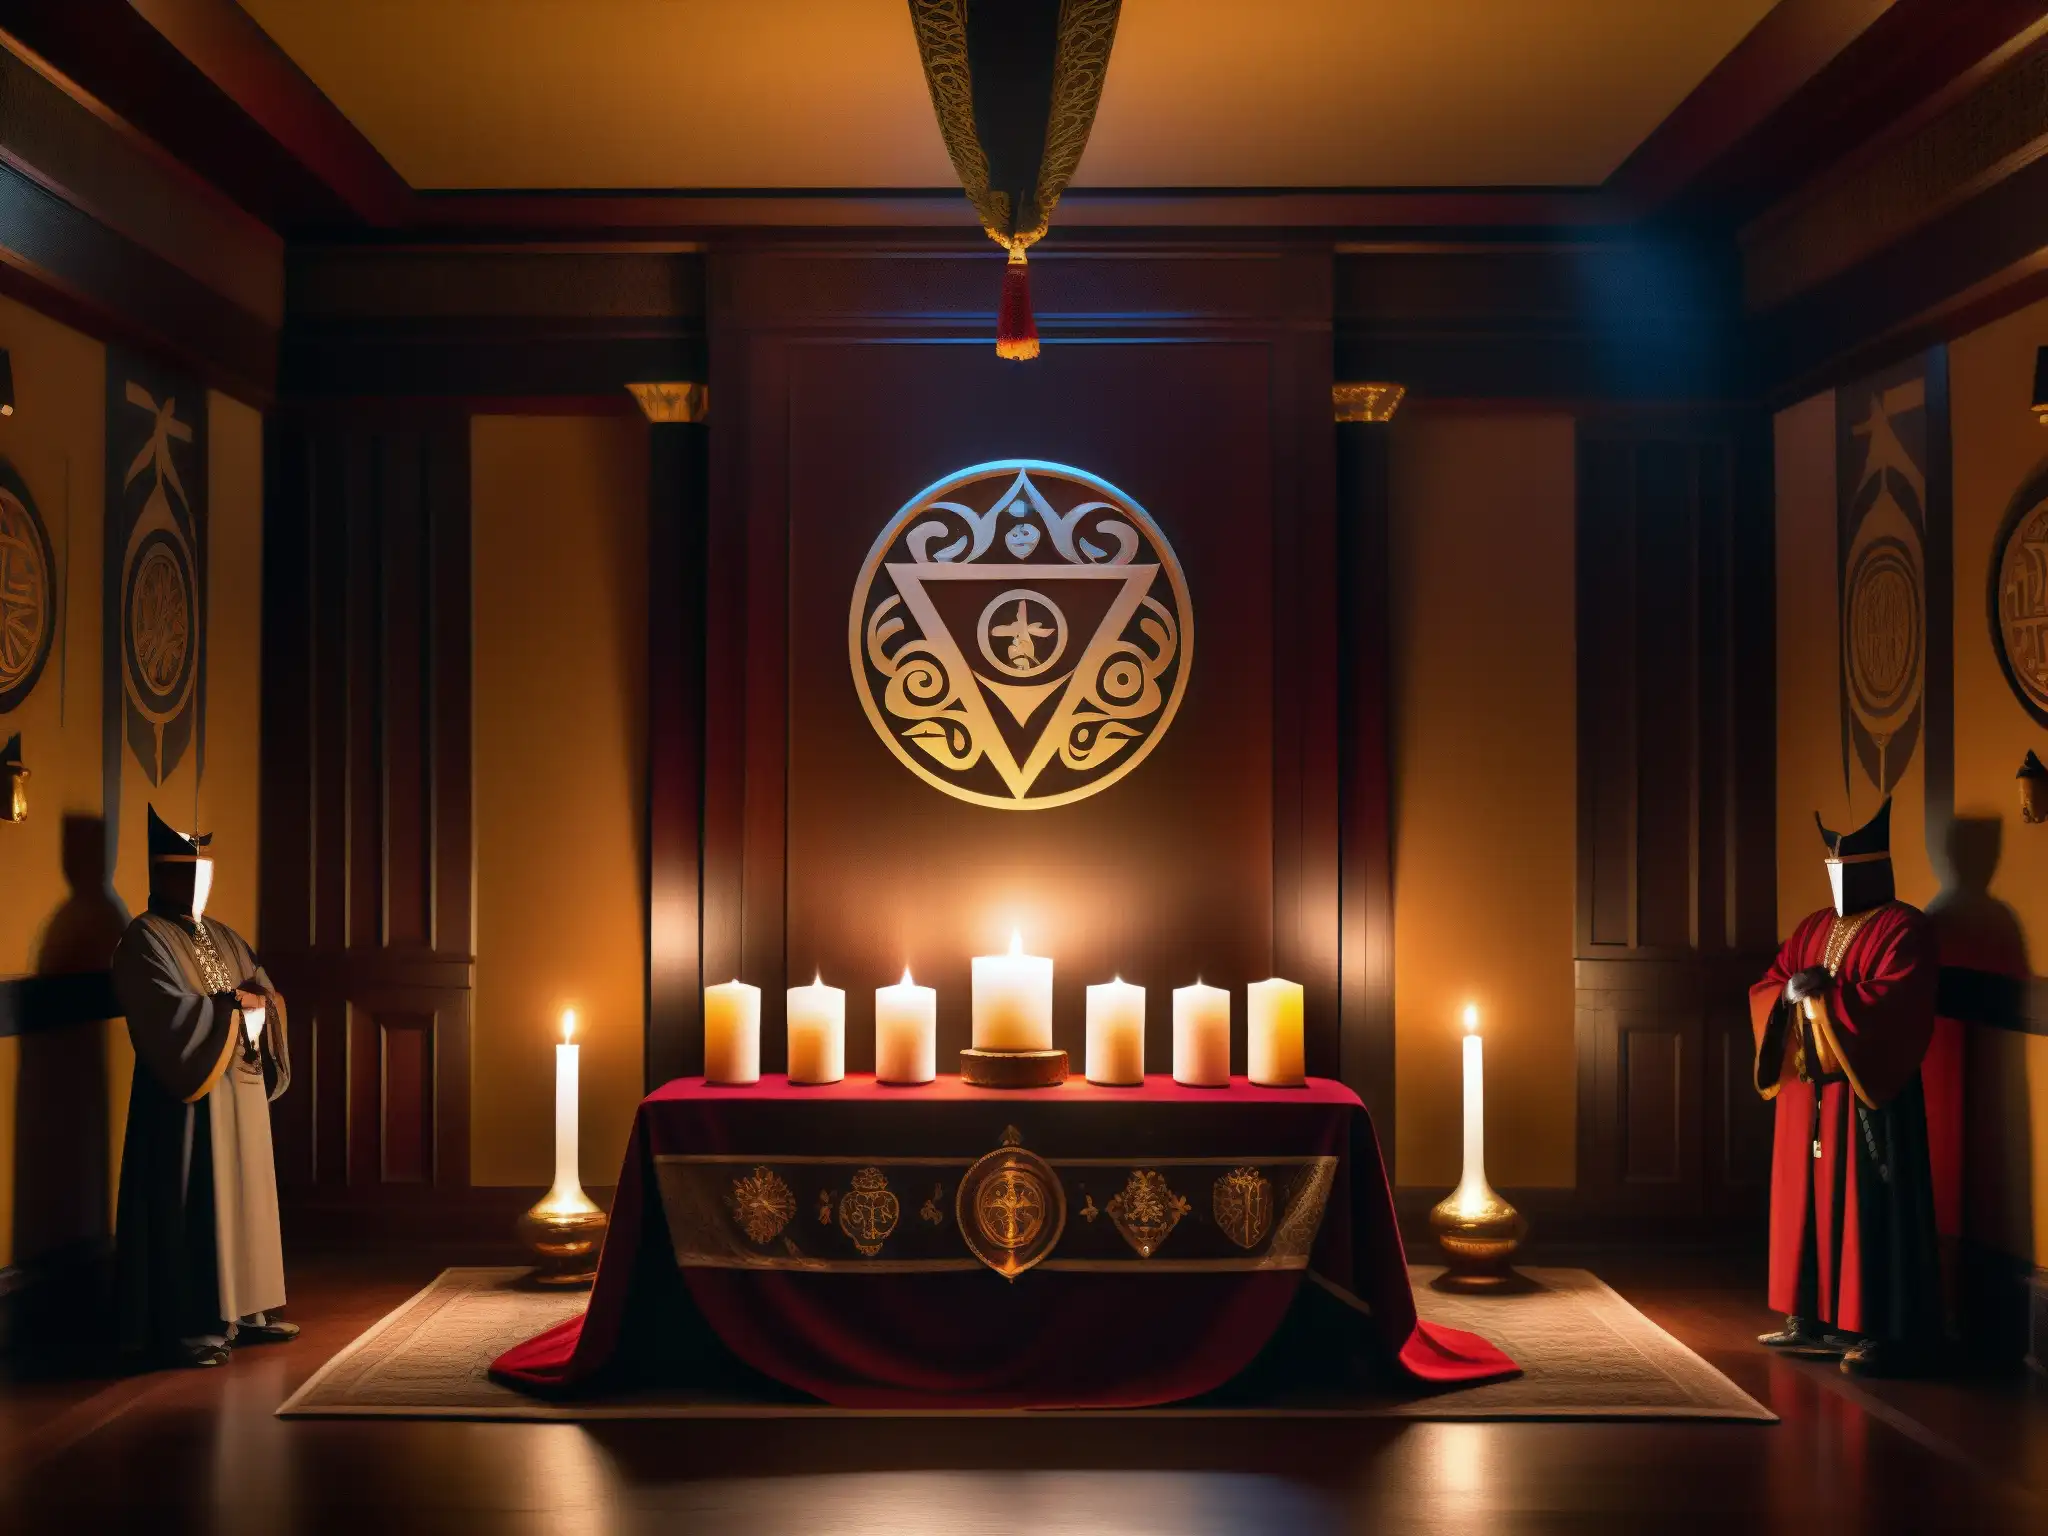 Escena misteriosa de rituales ocultistas élite en habitación sombría iluminada por velas